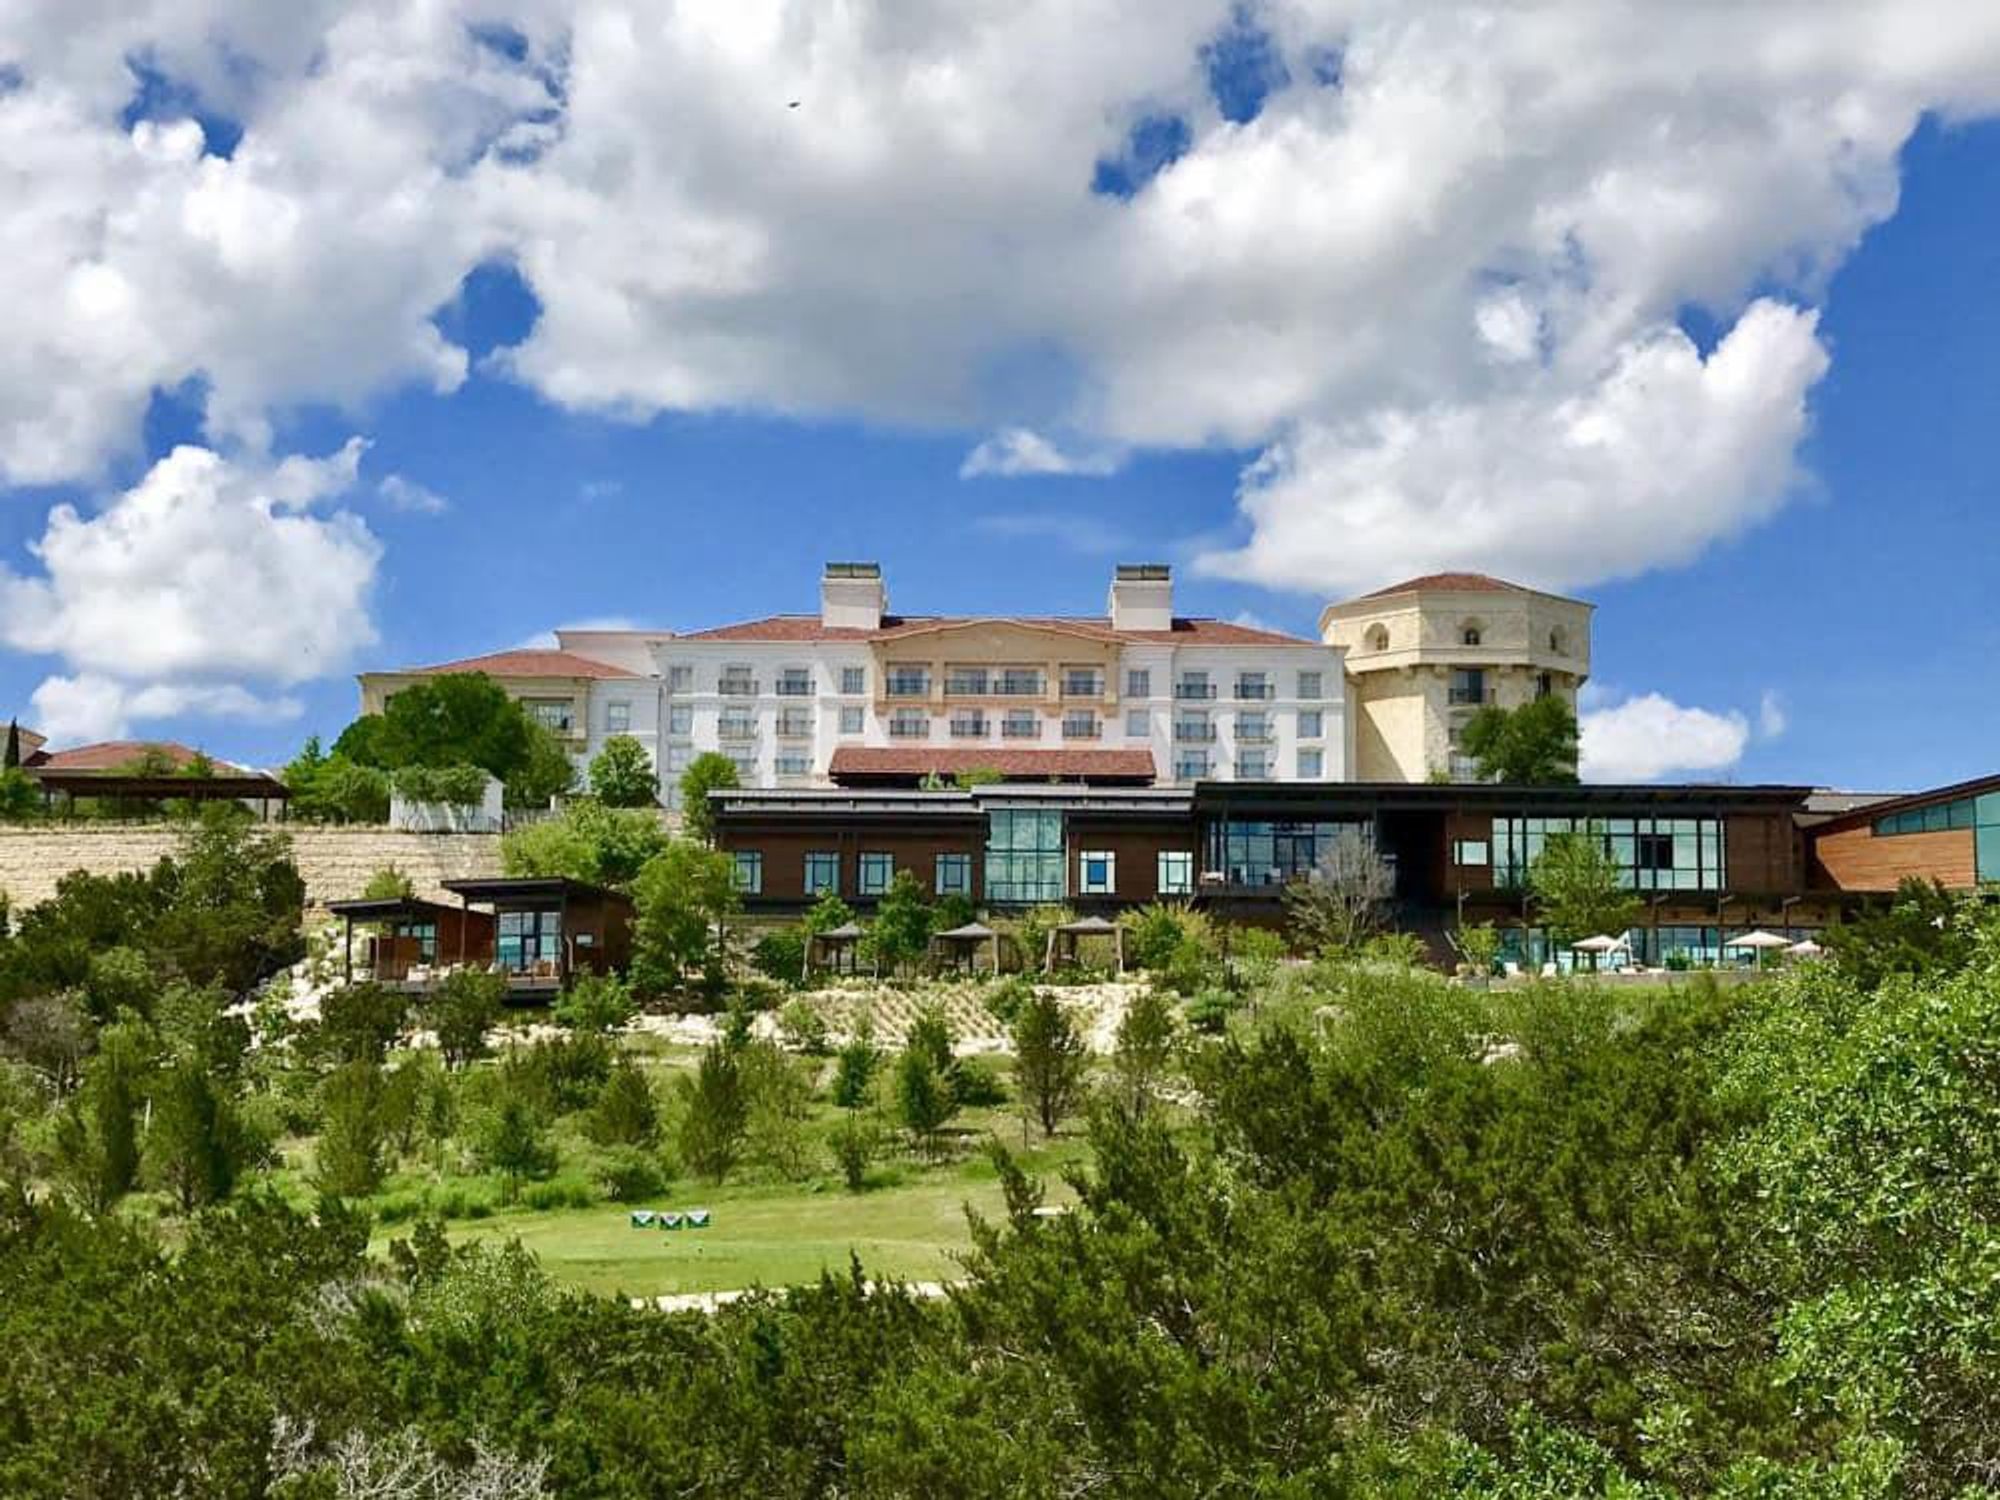 La Cantera Resort & Spa, San Antonio, Texas